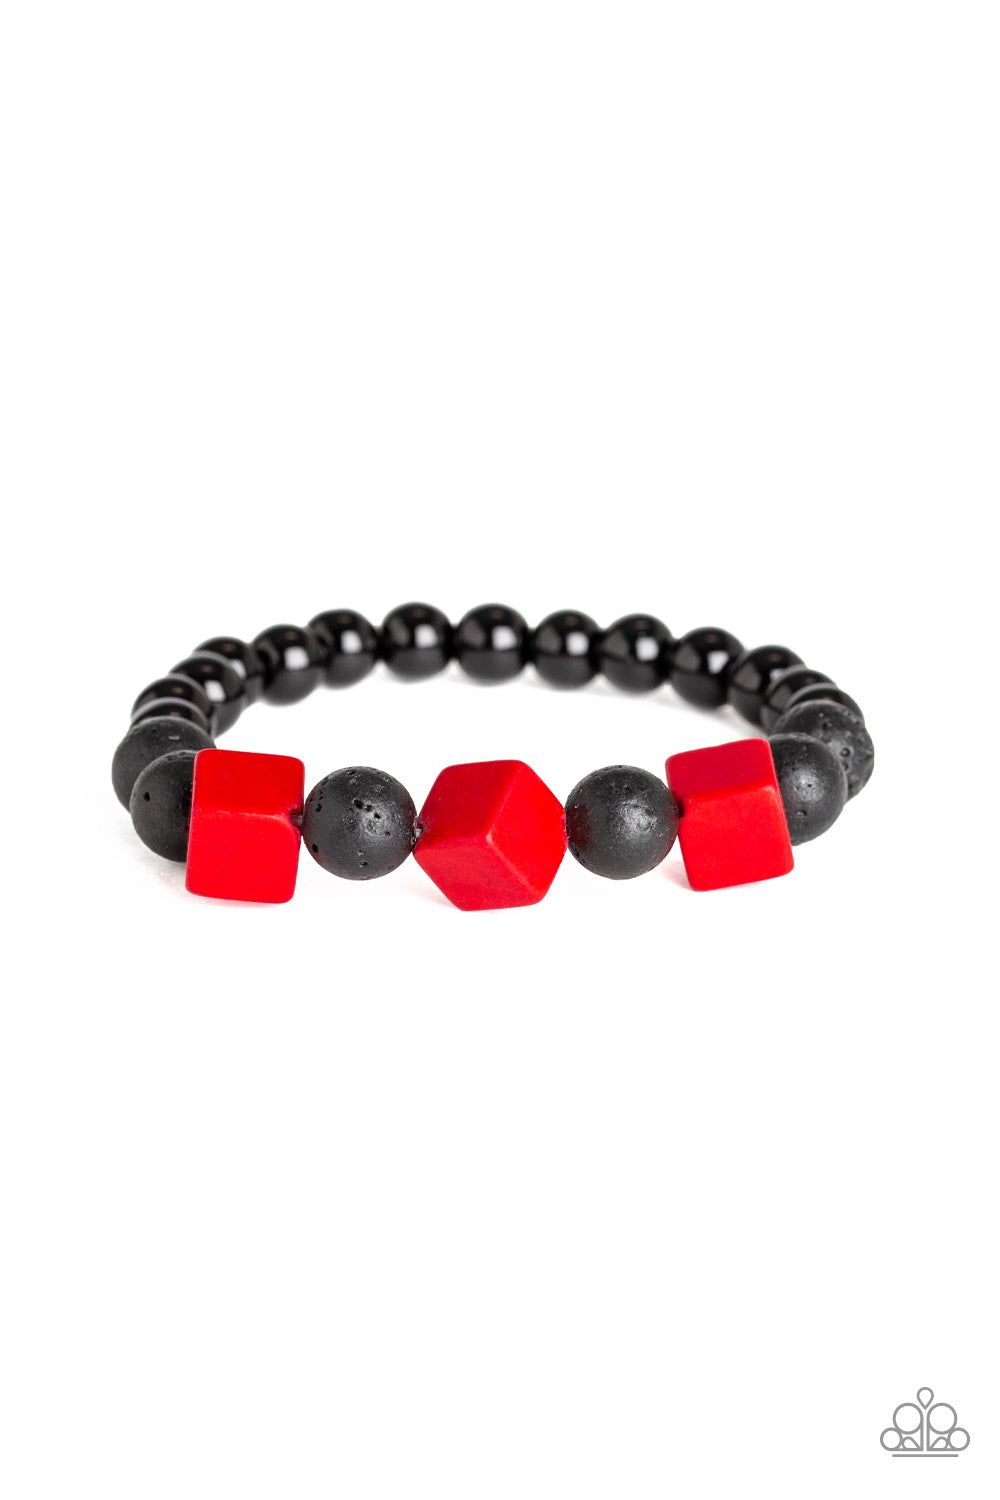 Paparazzi Accessories - Purpose - Red Bracelet - Alies Bling Bar